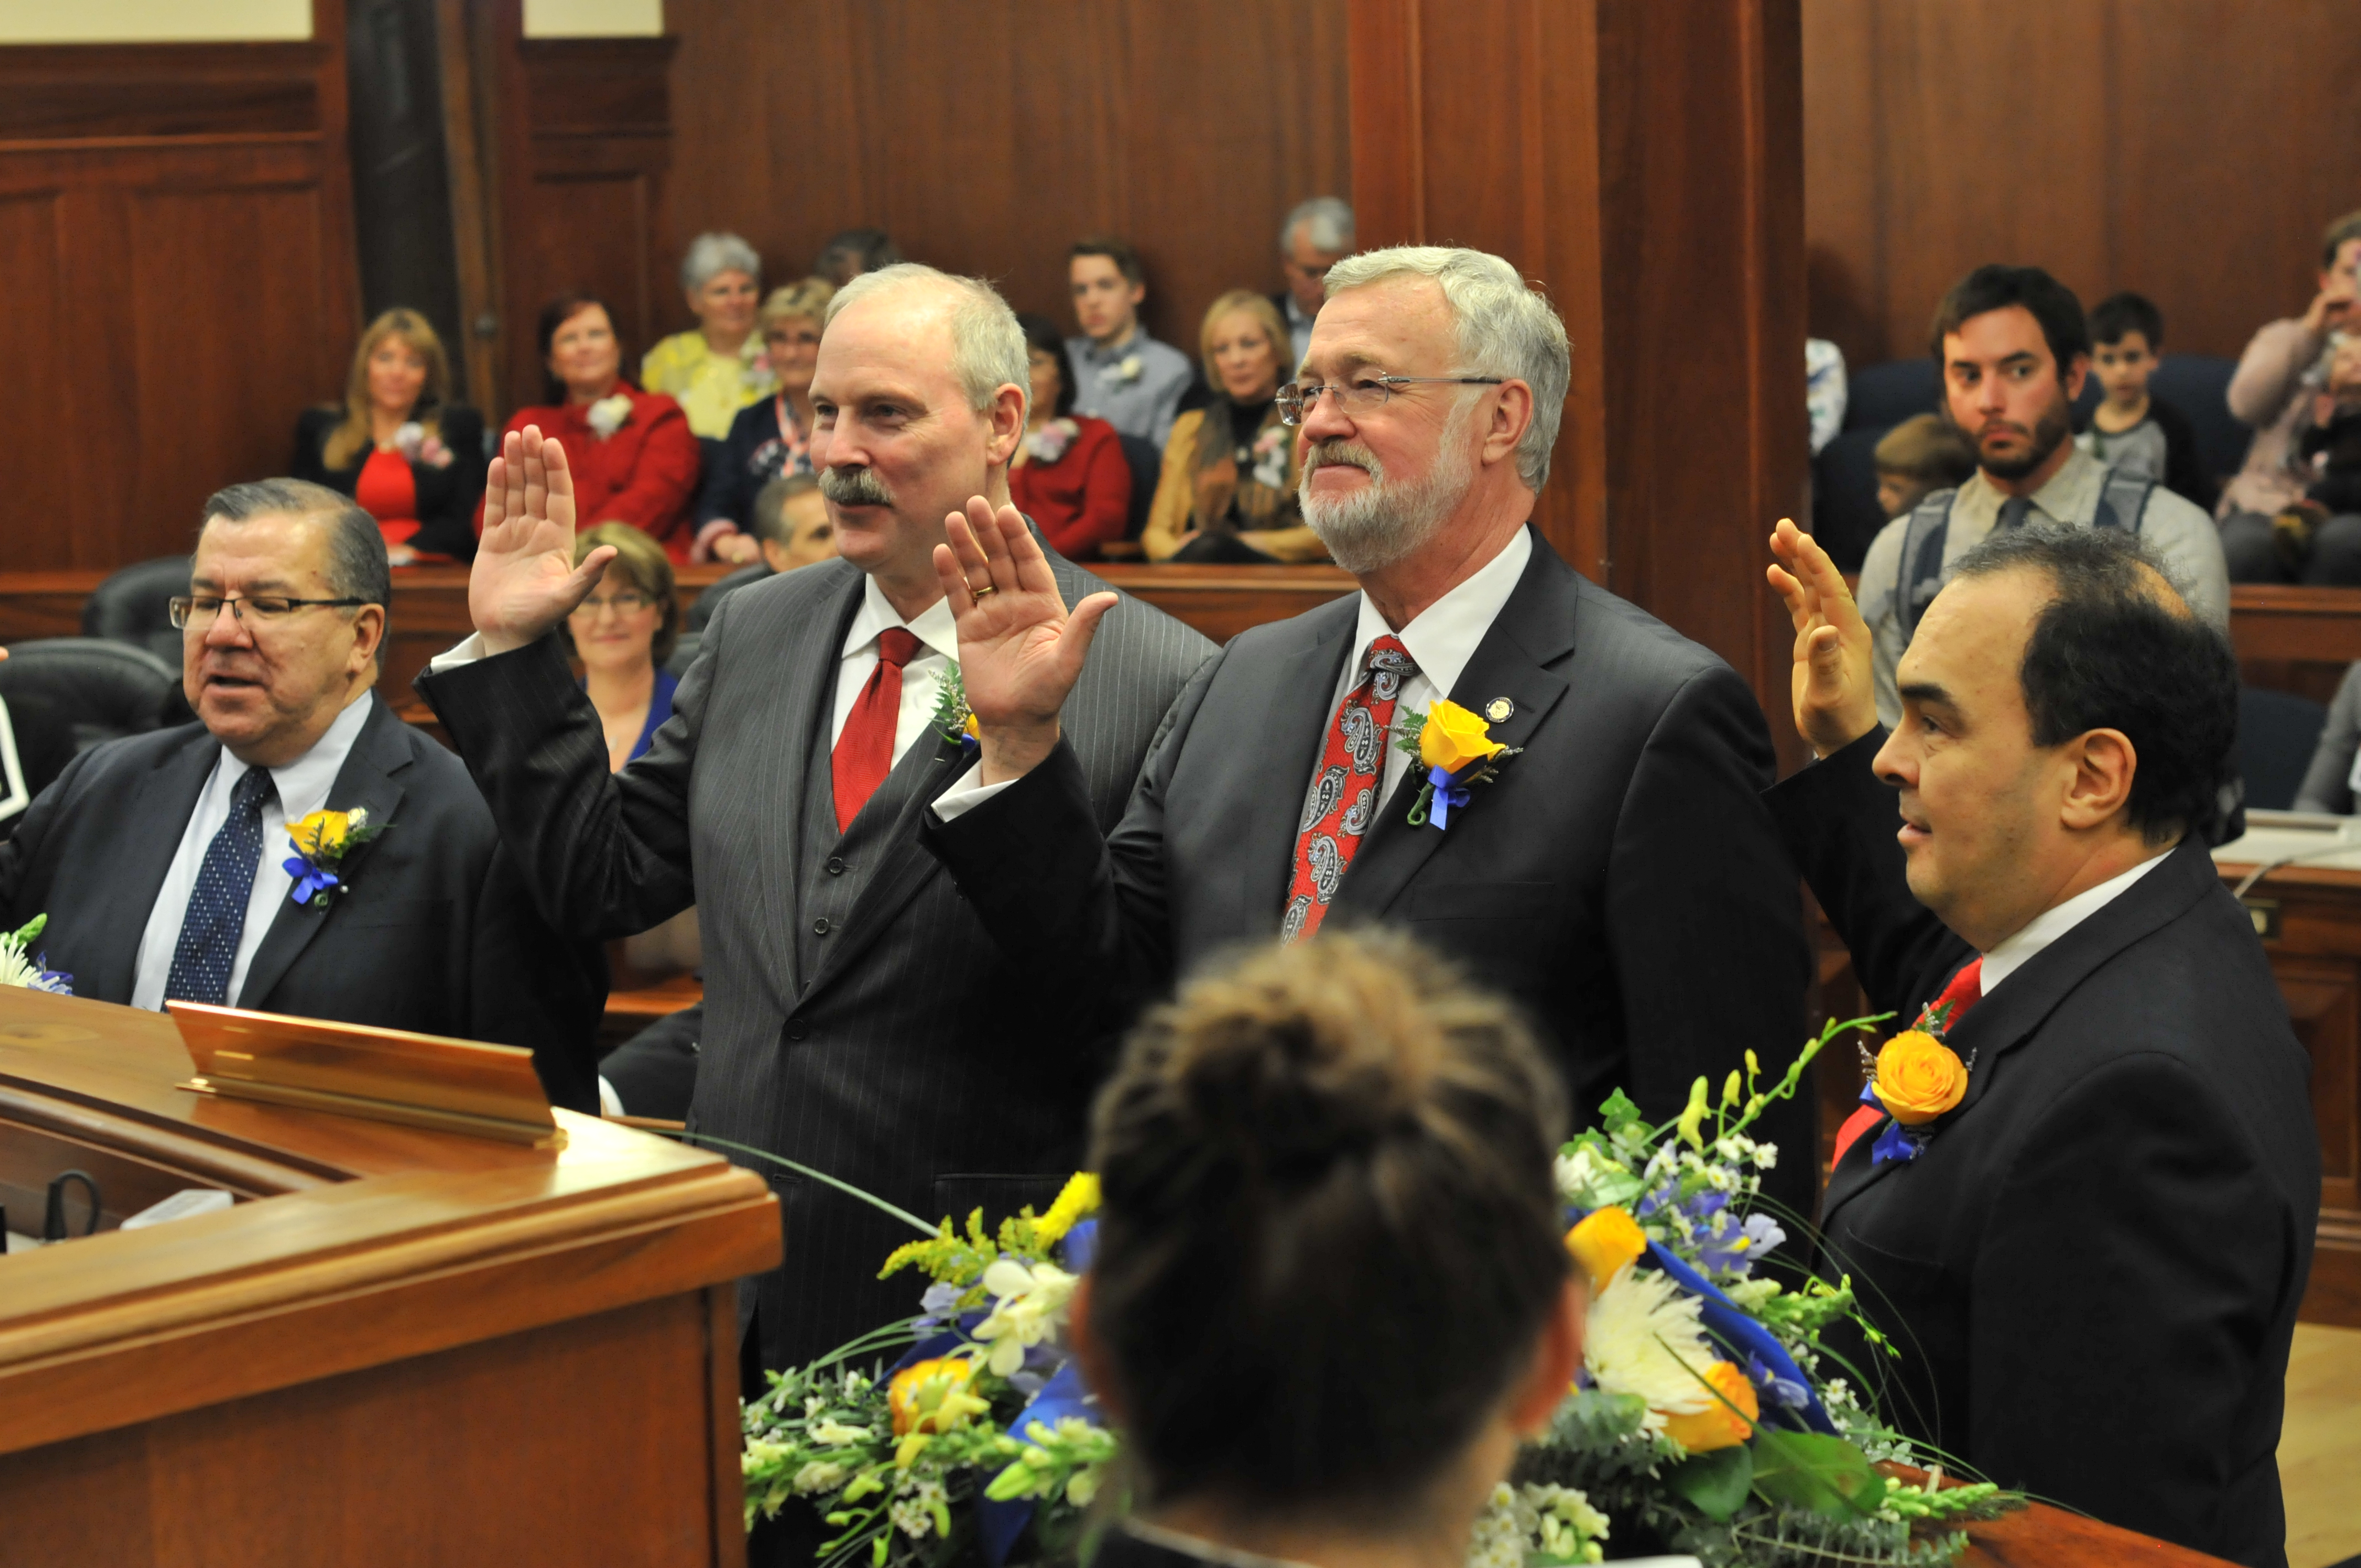 Senator Stedman taking the oath of office with Senators Hoffman, Stevens and Olson